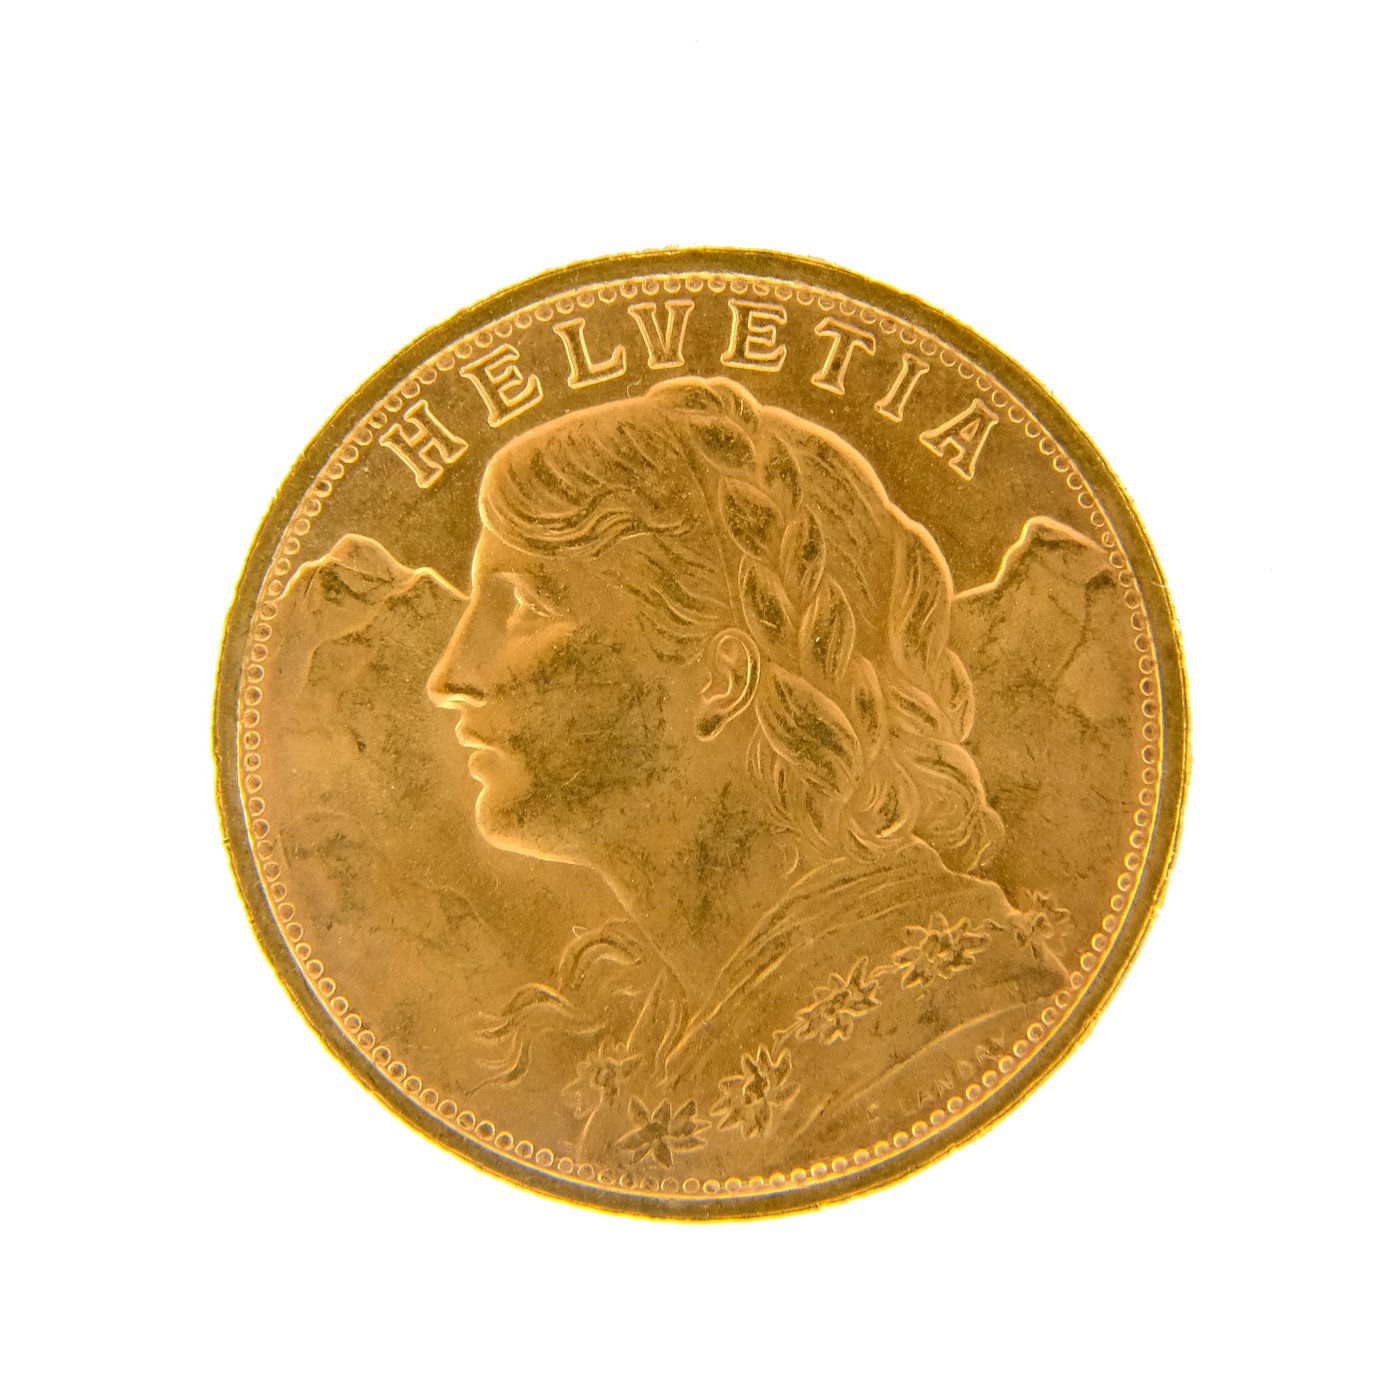 .. - Švýcarsko zlatý 20 frank VRENELI 1927, zlato 900/1000, hrubá hmotnost 6,5g